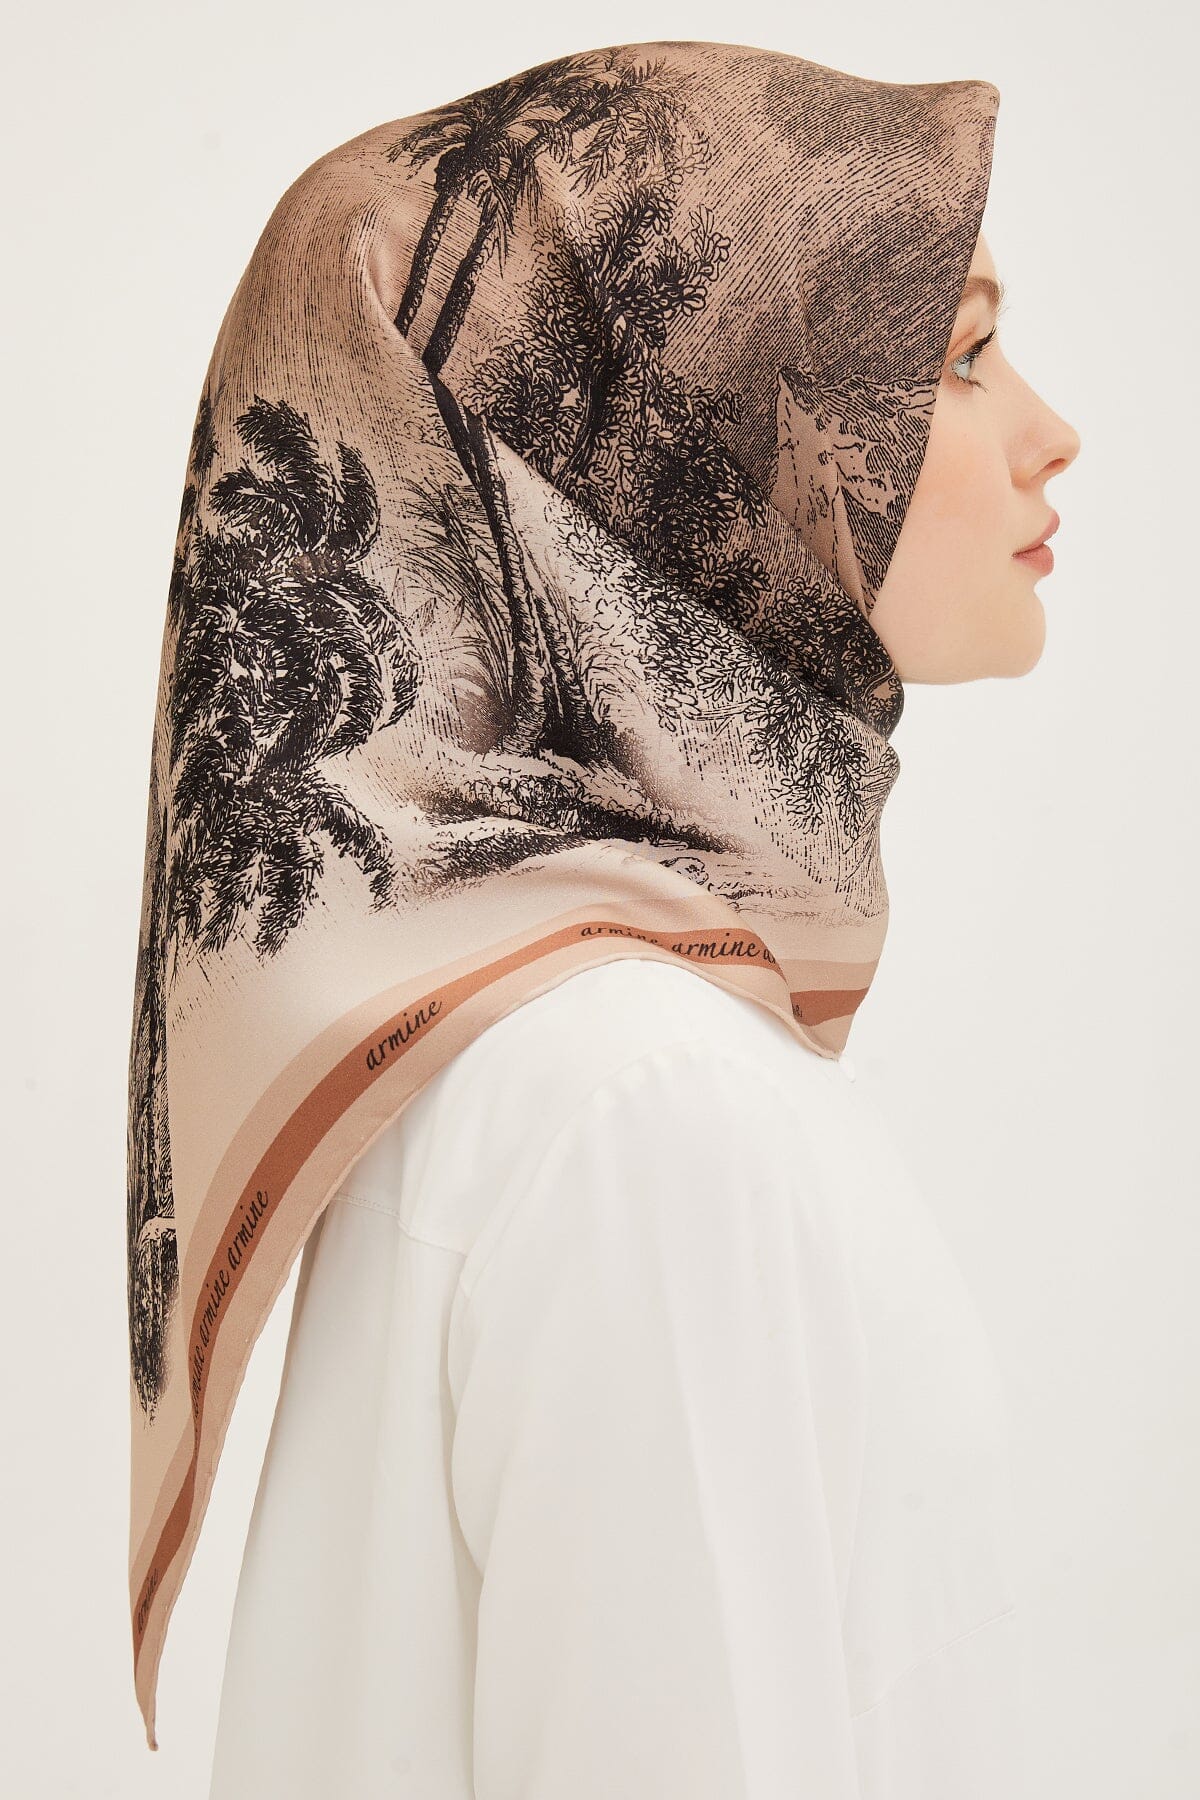 Armine Cesme Turkiye Silk Scarf #1 Silk Hijabs,Armine Armine 